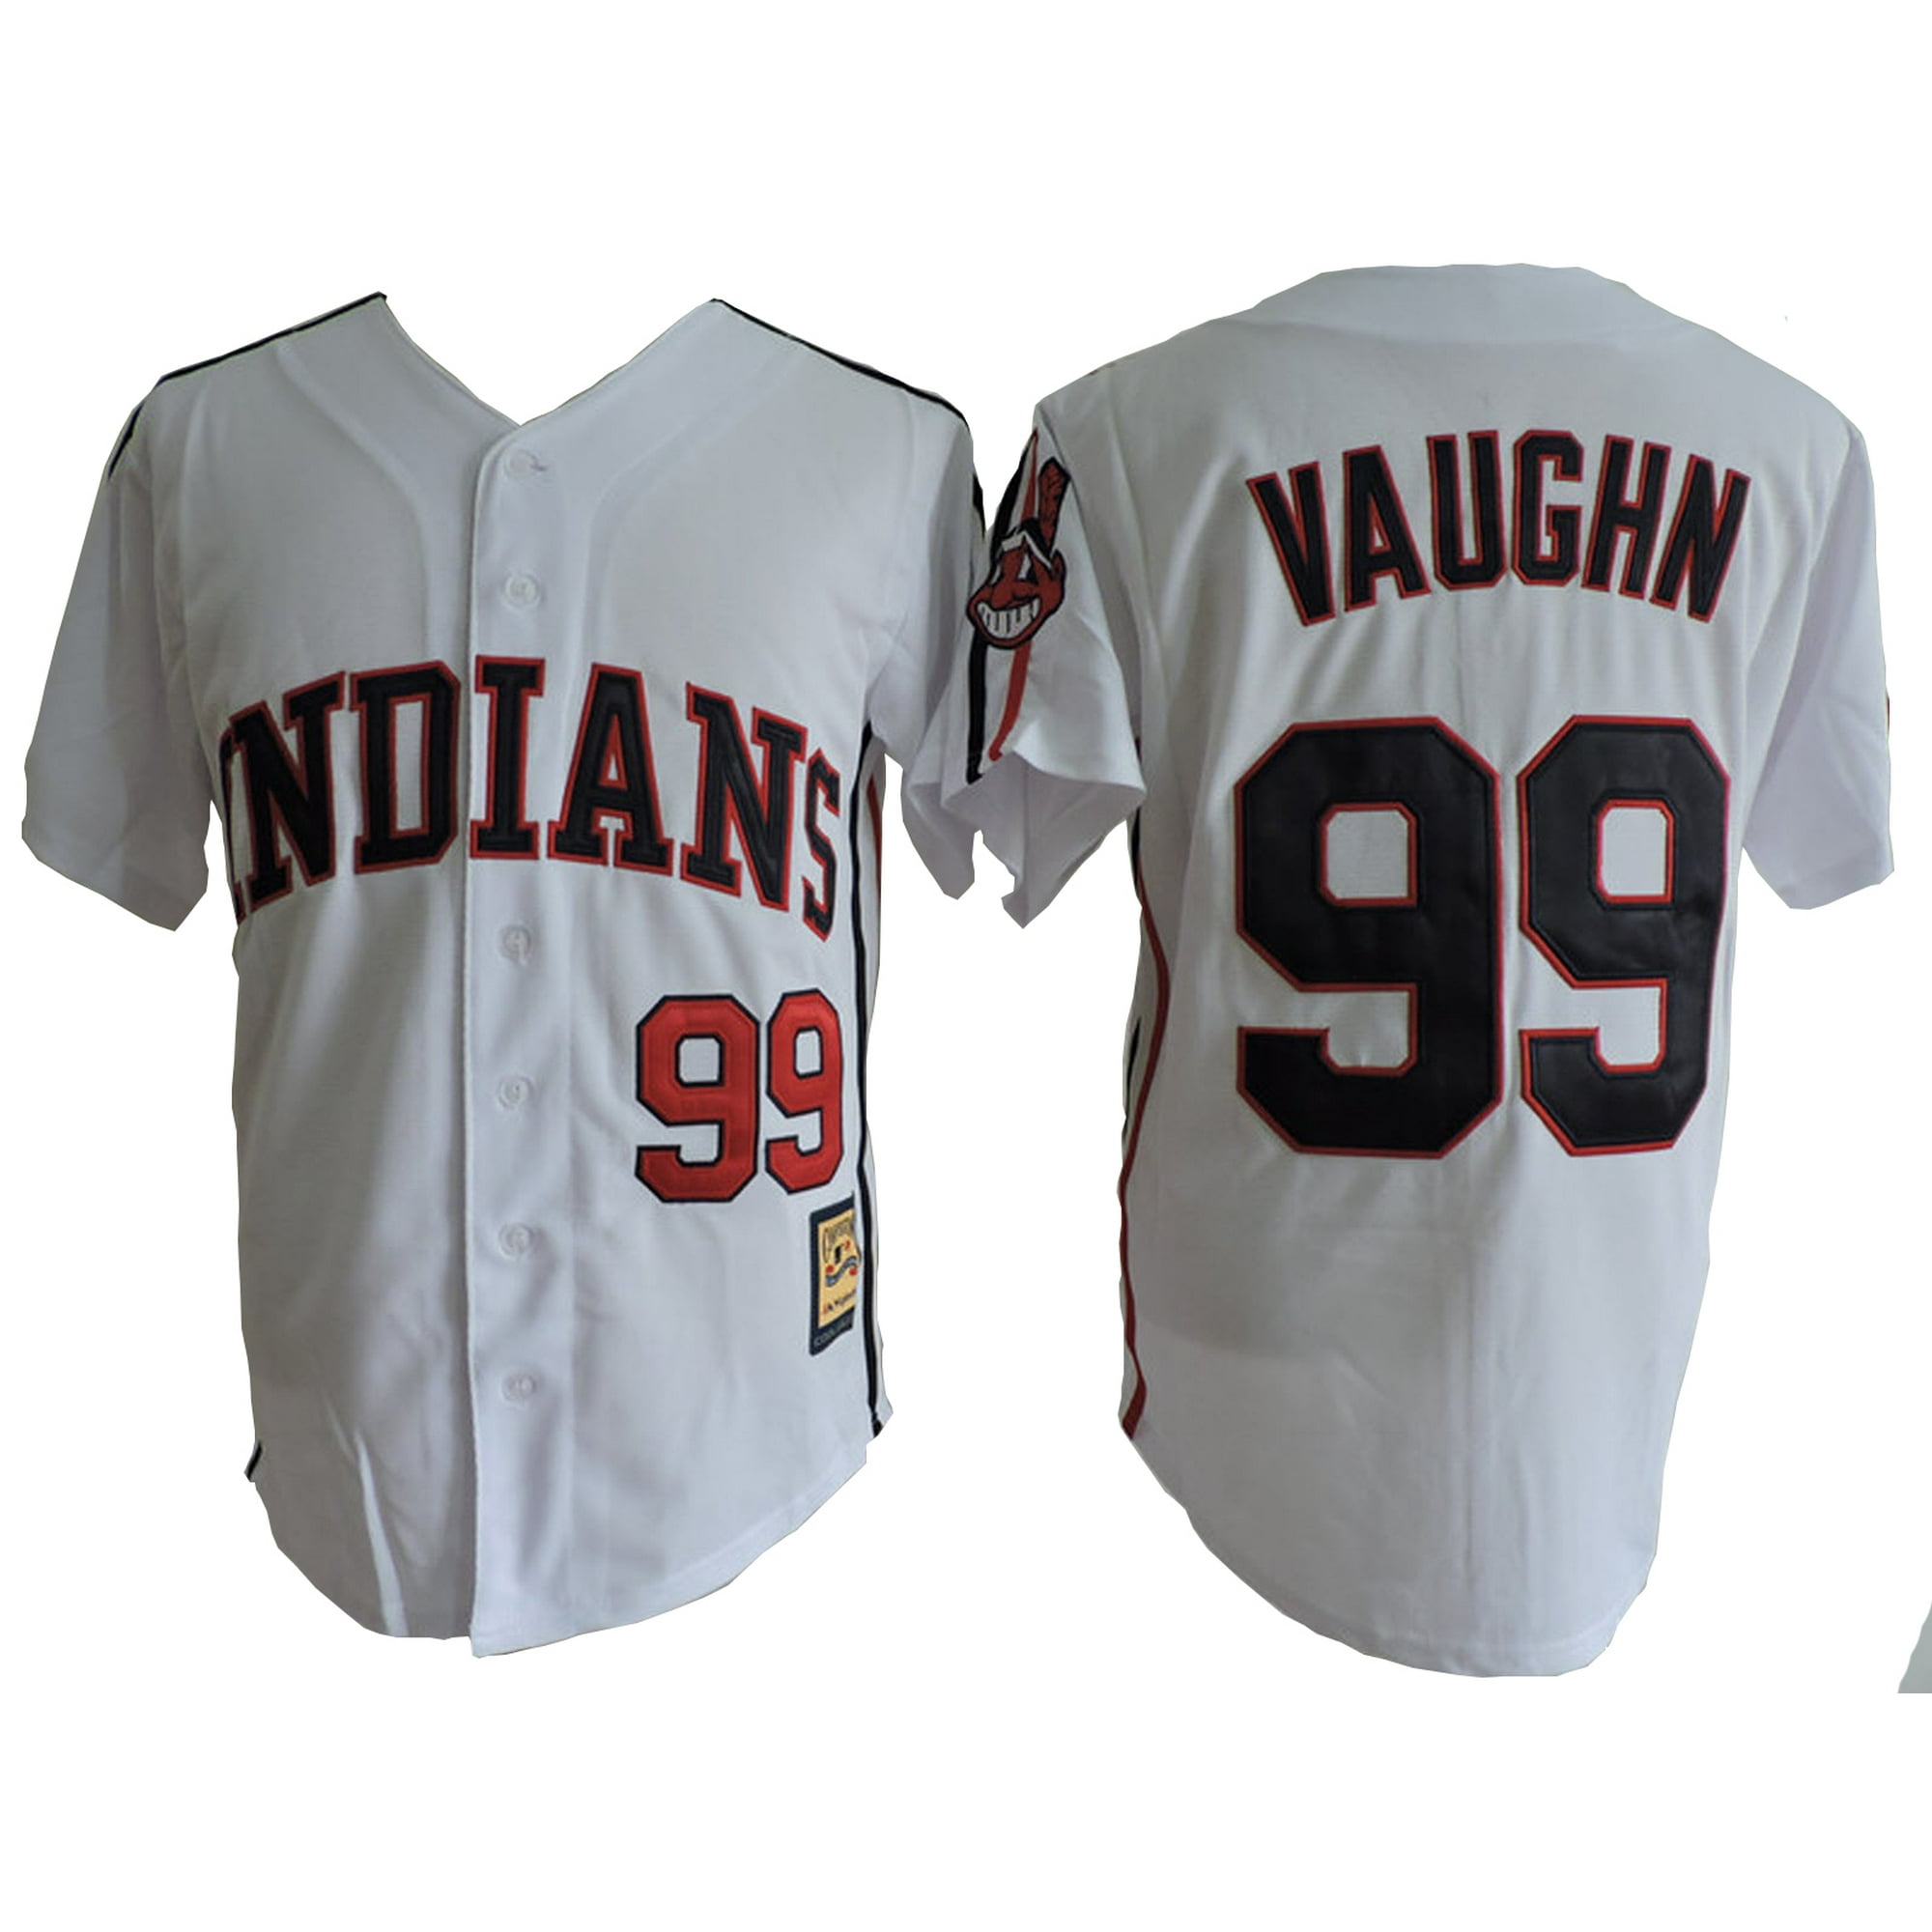 Rick Wild Thing Vaughn 99 Jersey Major League Costume Movie White Uniform  Gift 